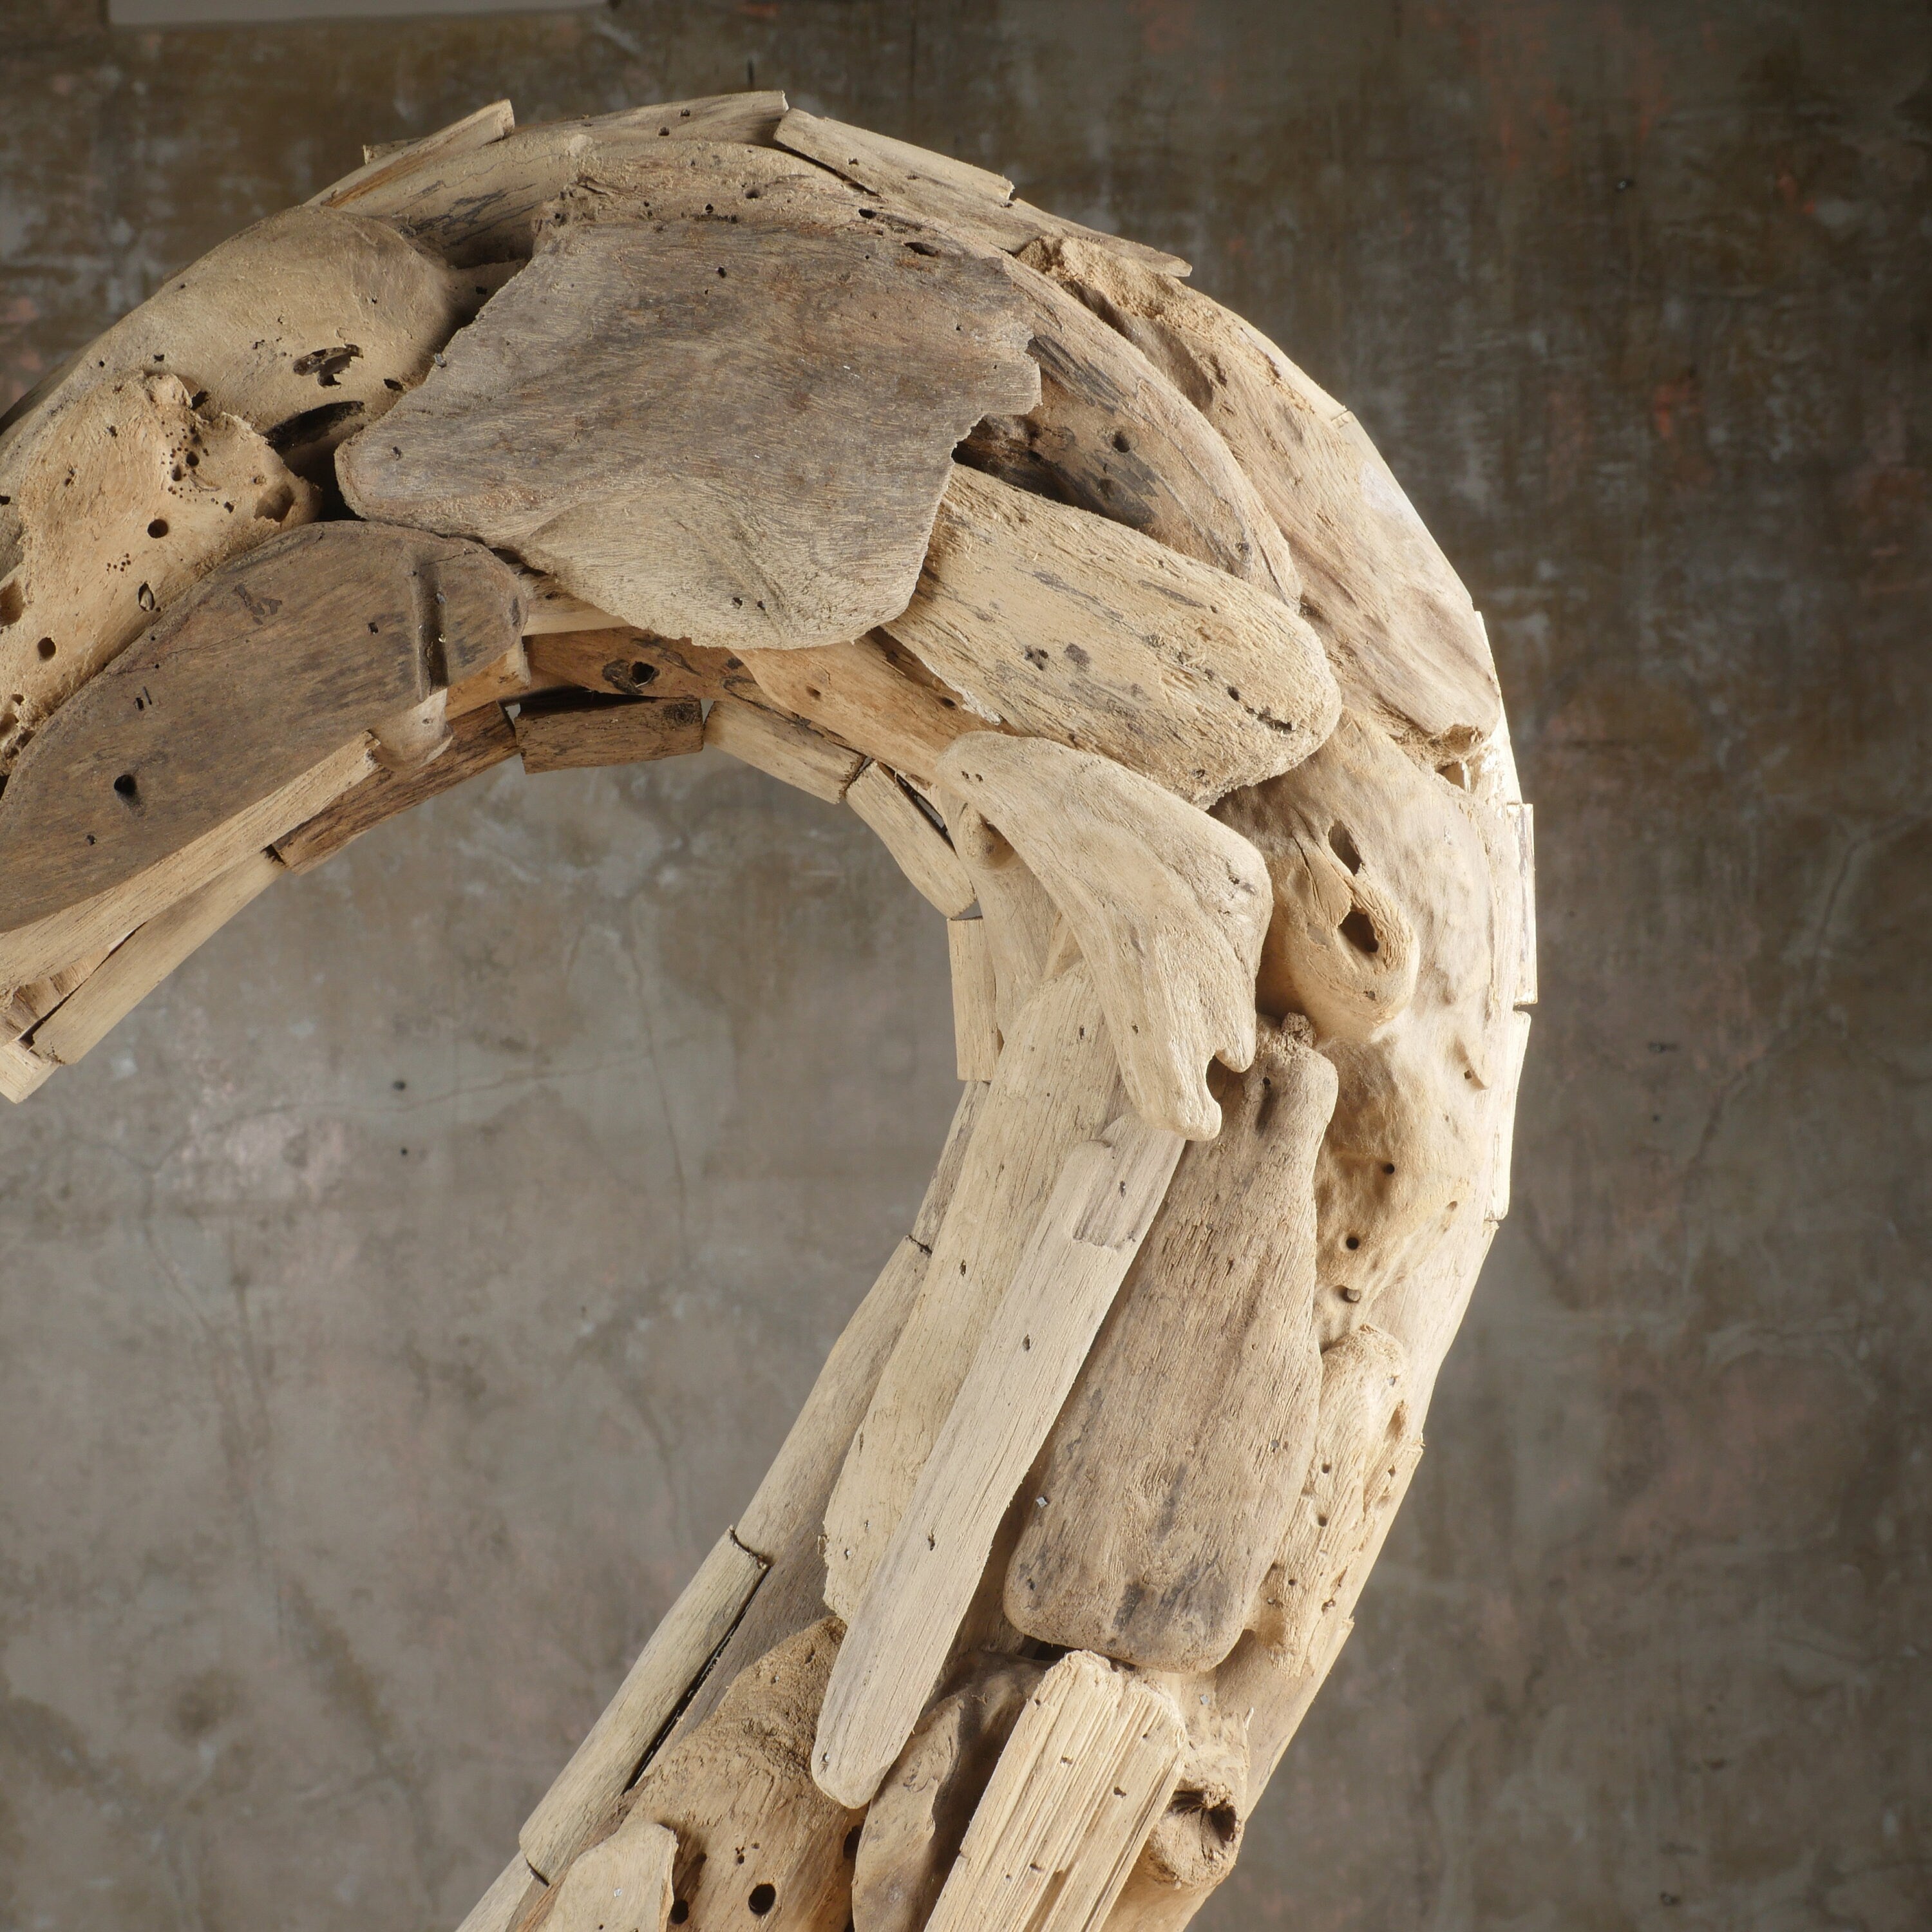 The Driftwood Lonely Heart - Driftwood Art Sculpture - Tabletop Driftwood Decor - Contemporary Driftwood Heart Sculpture - Driftwood Heart